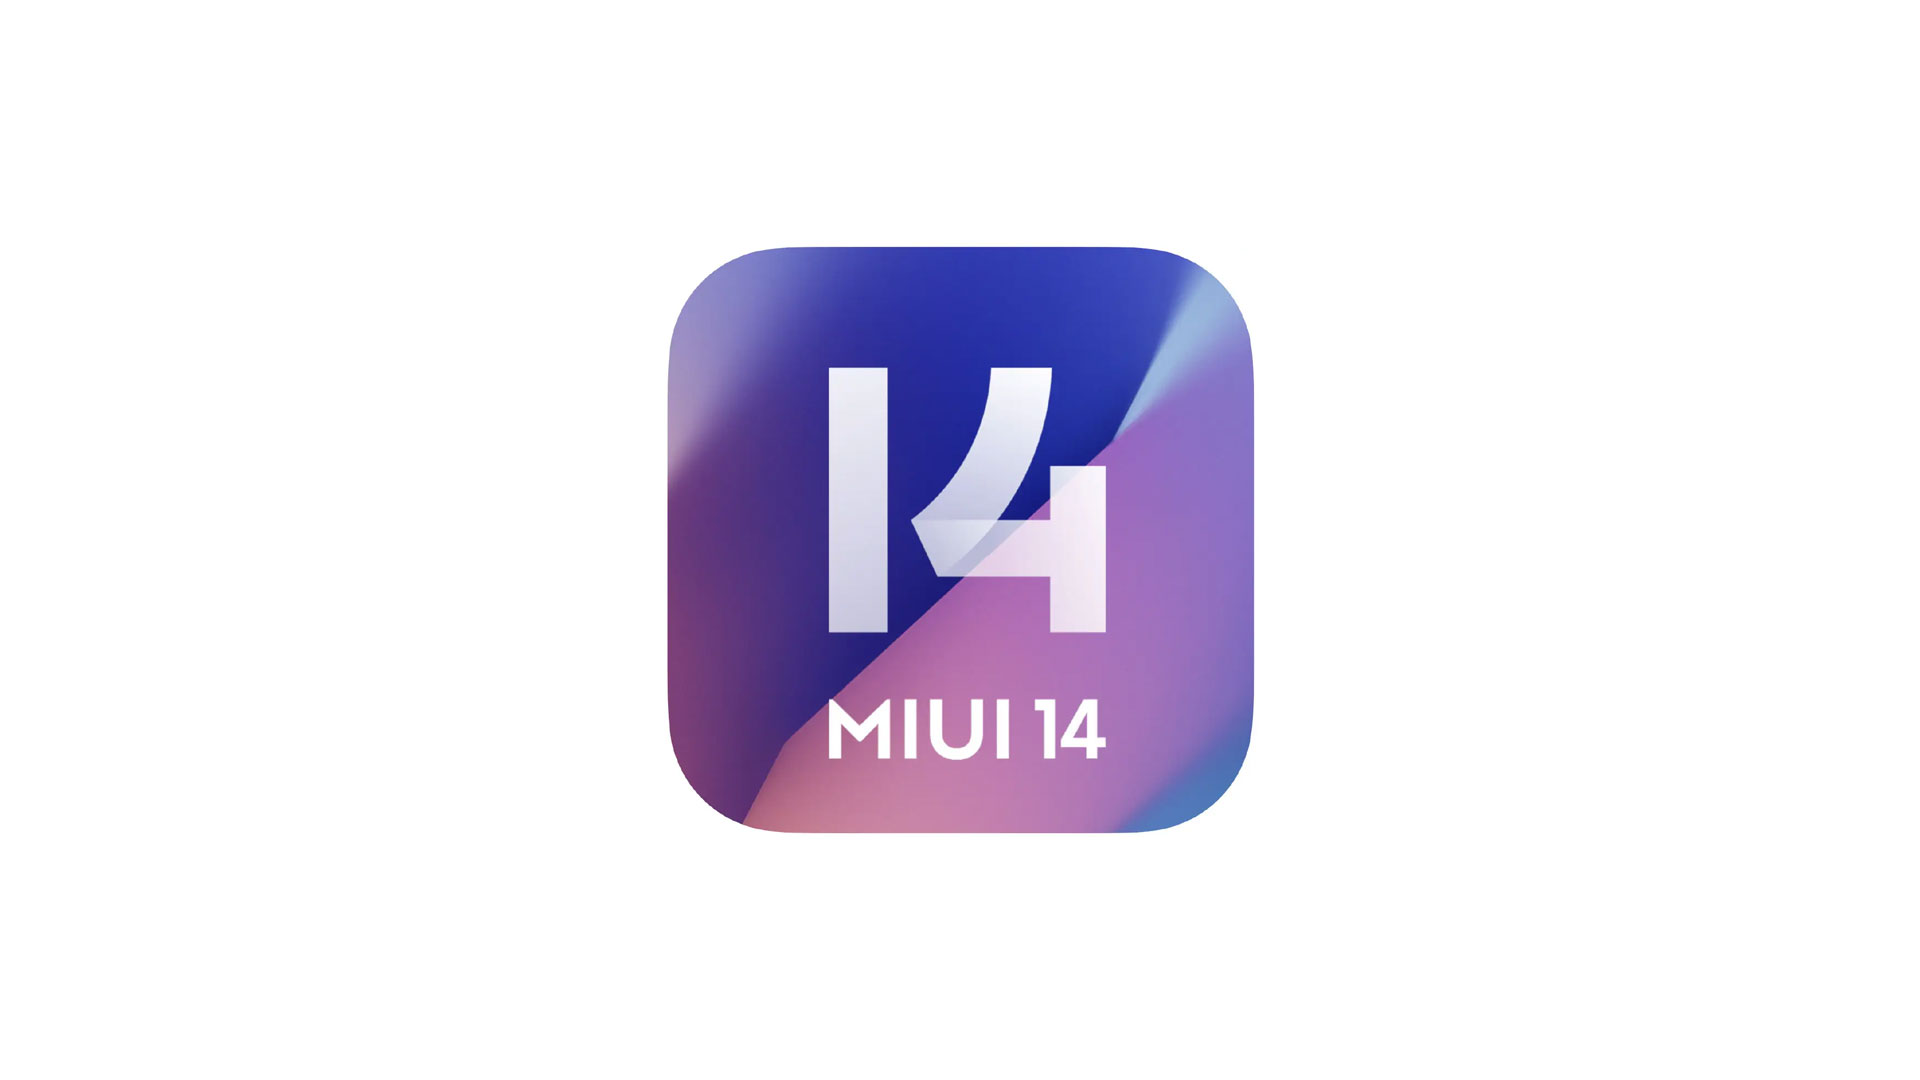 Miui 14 note 9. Миуй 14. Xiaomi MIUI 14. MIUI логотип. "MIUI 14" батареи.